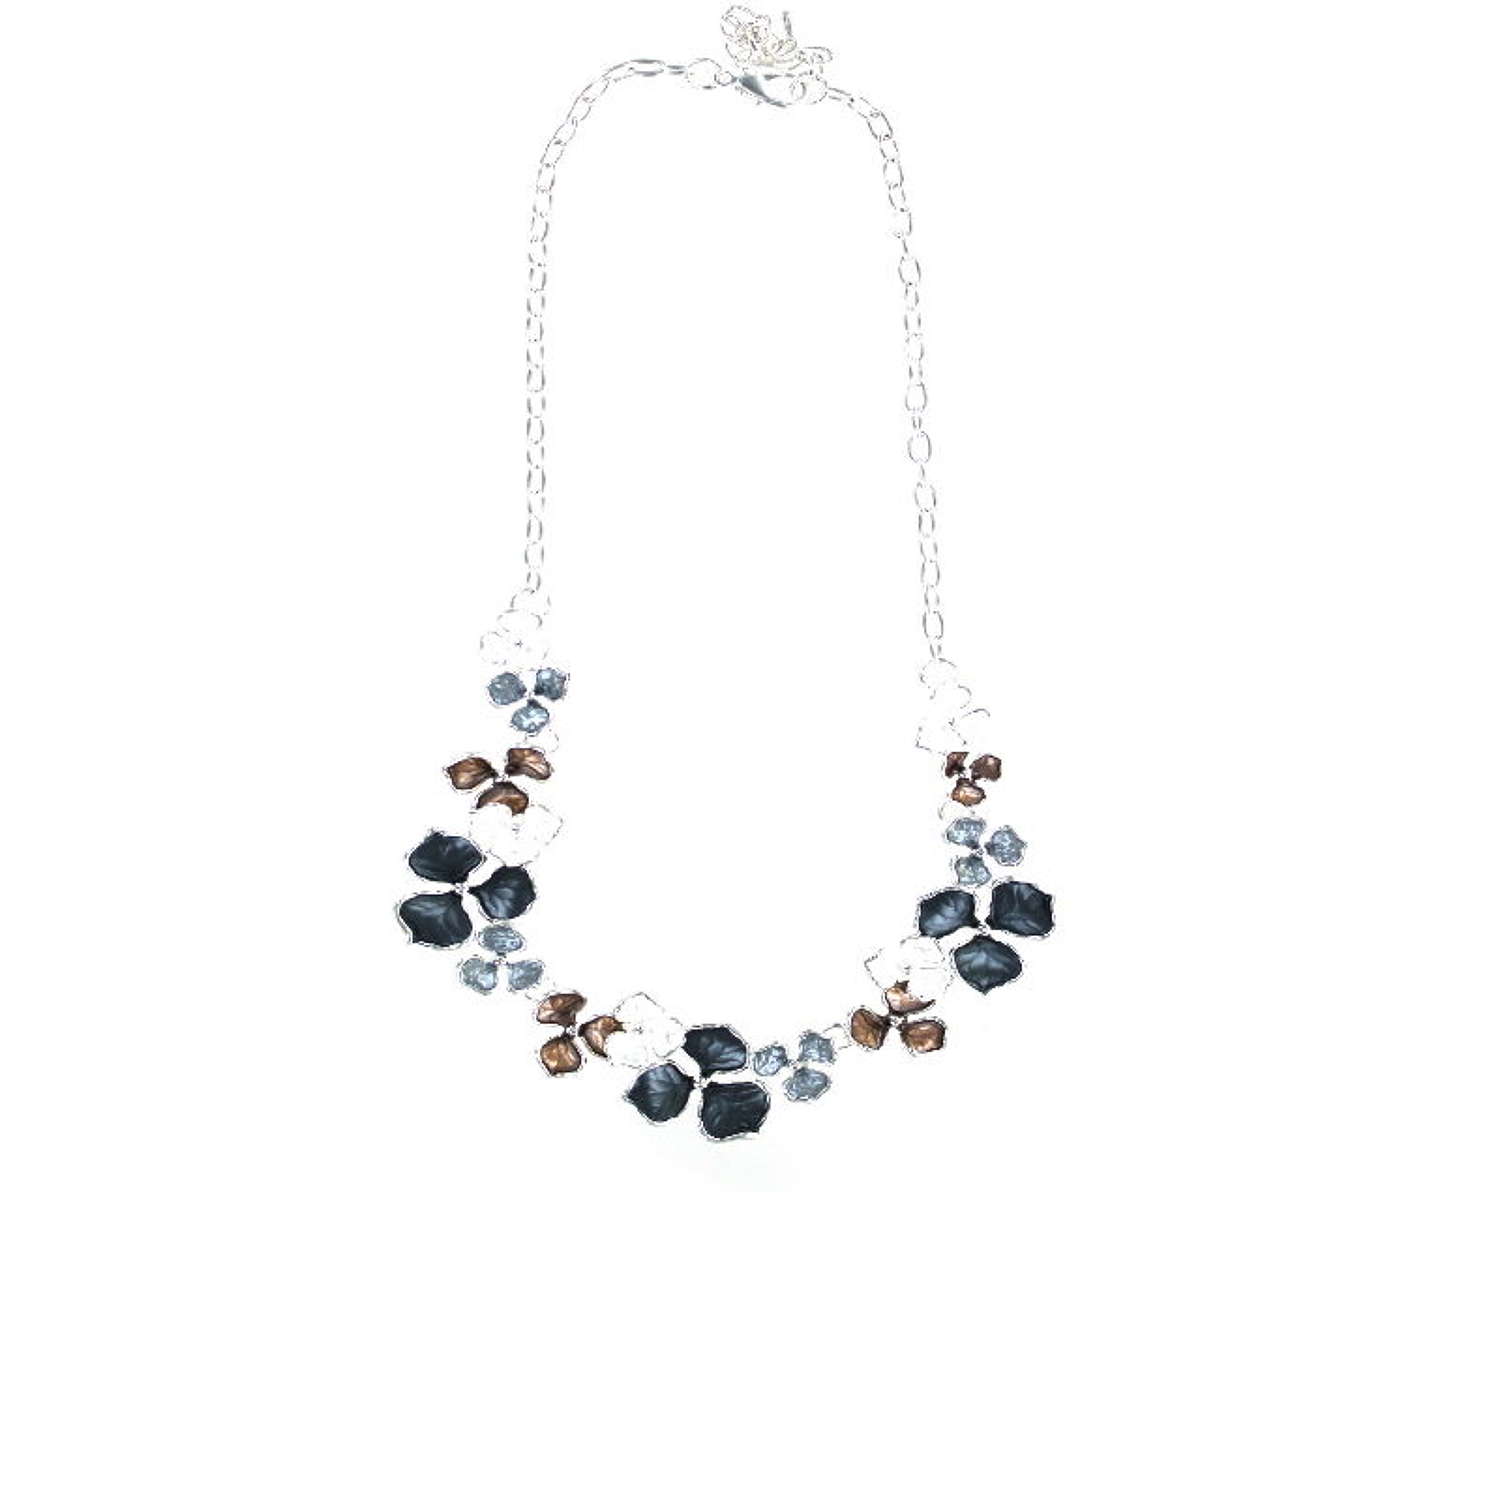 Enamel flower design necklace on silver tone chain.